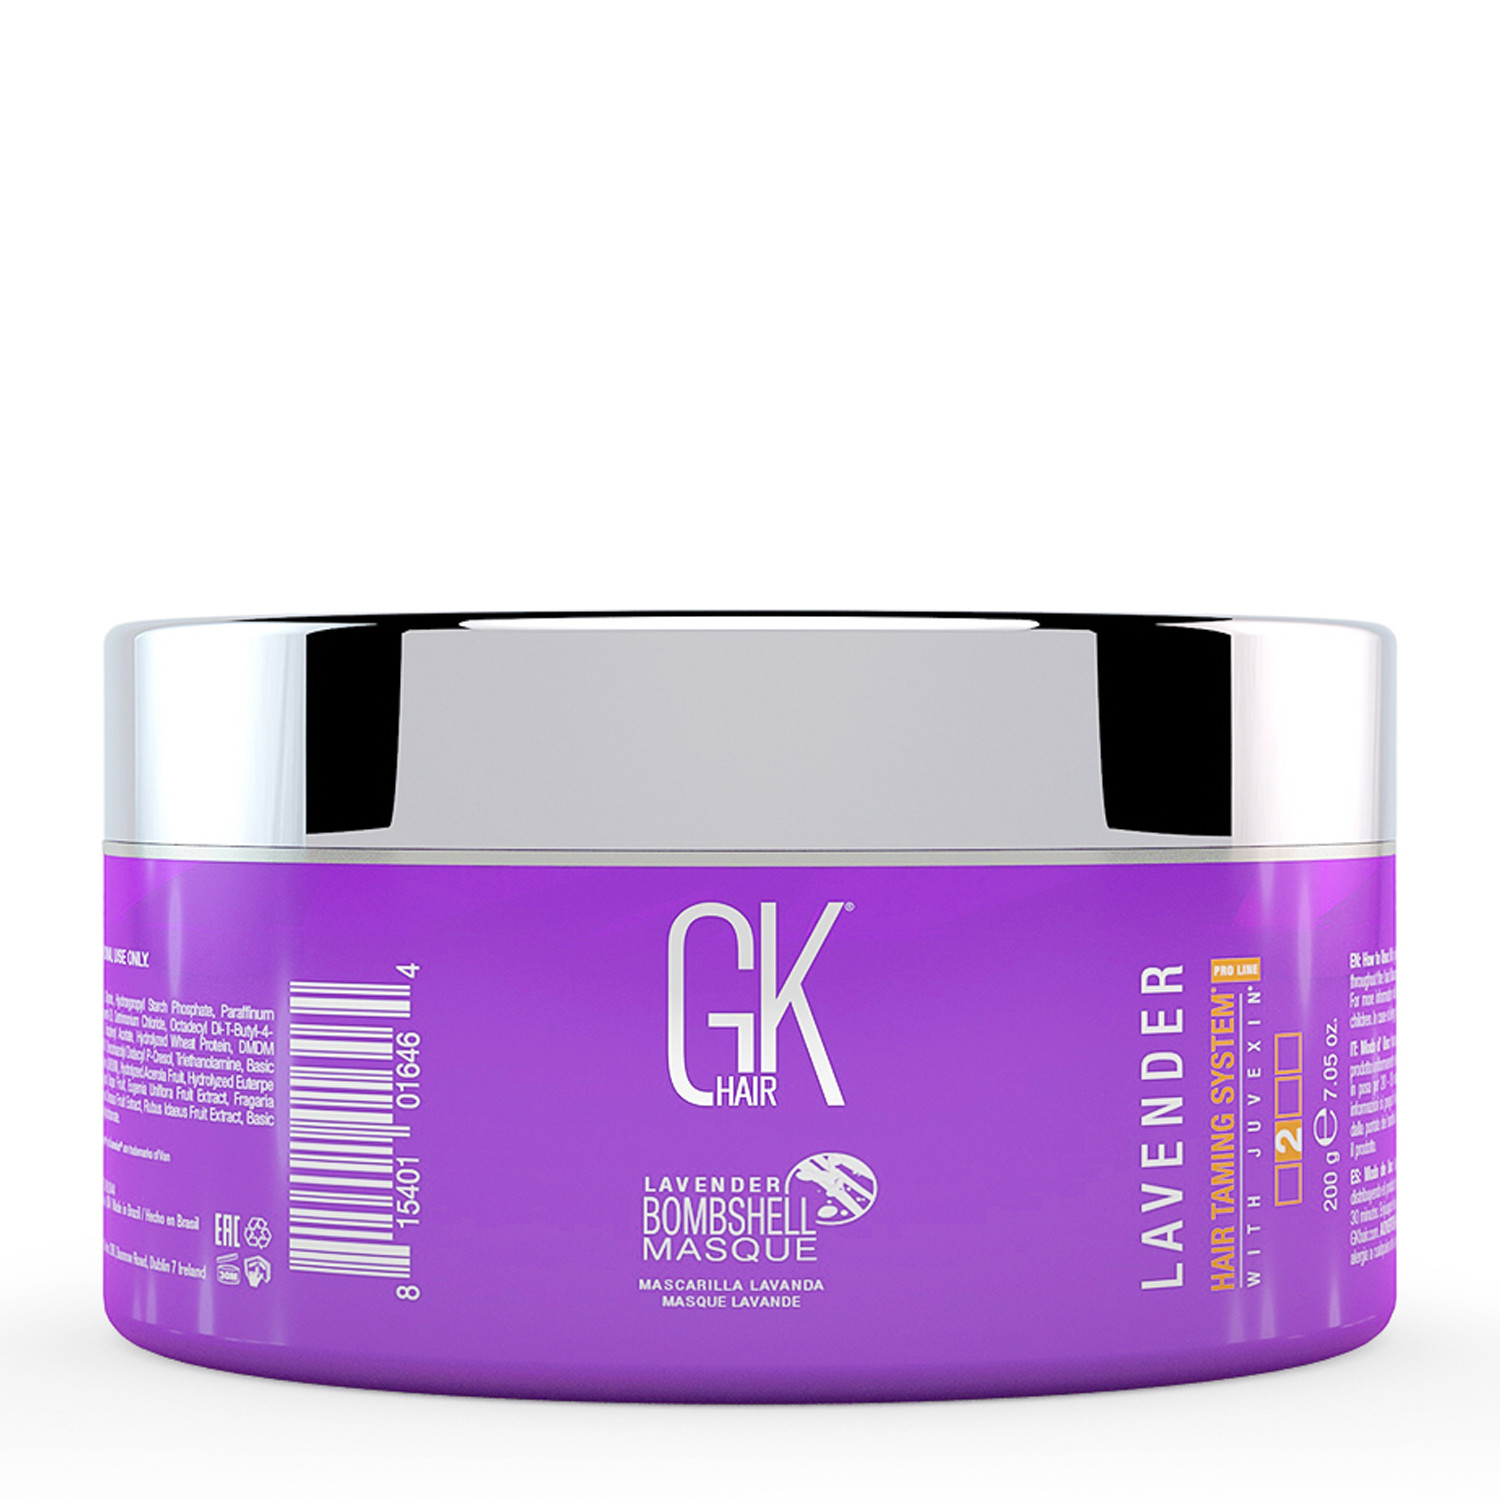 Global Keratin Lavender Bombshell Masque - Маска лавандовый оттенок